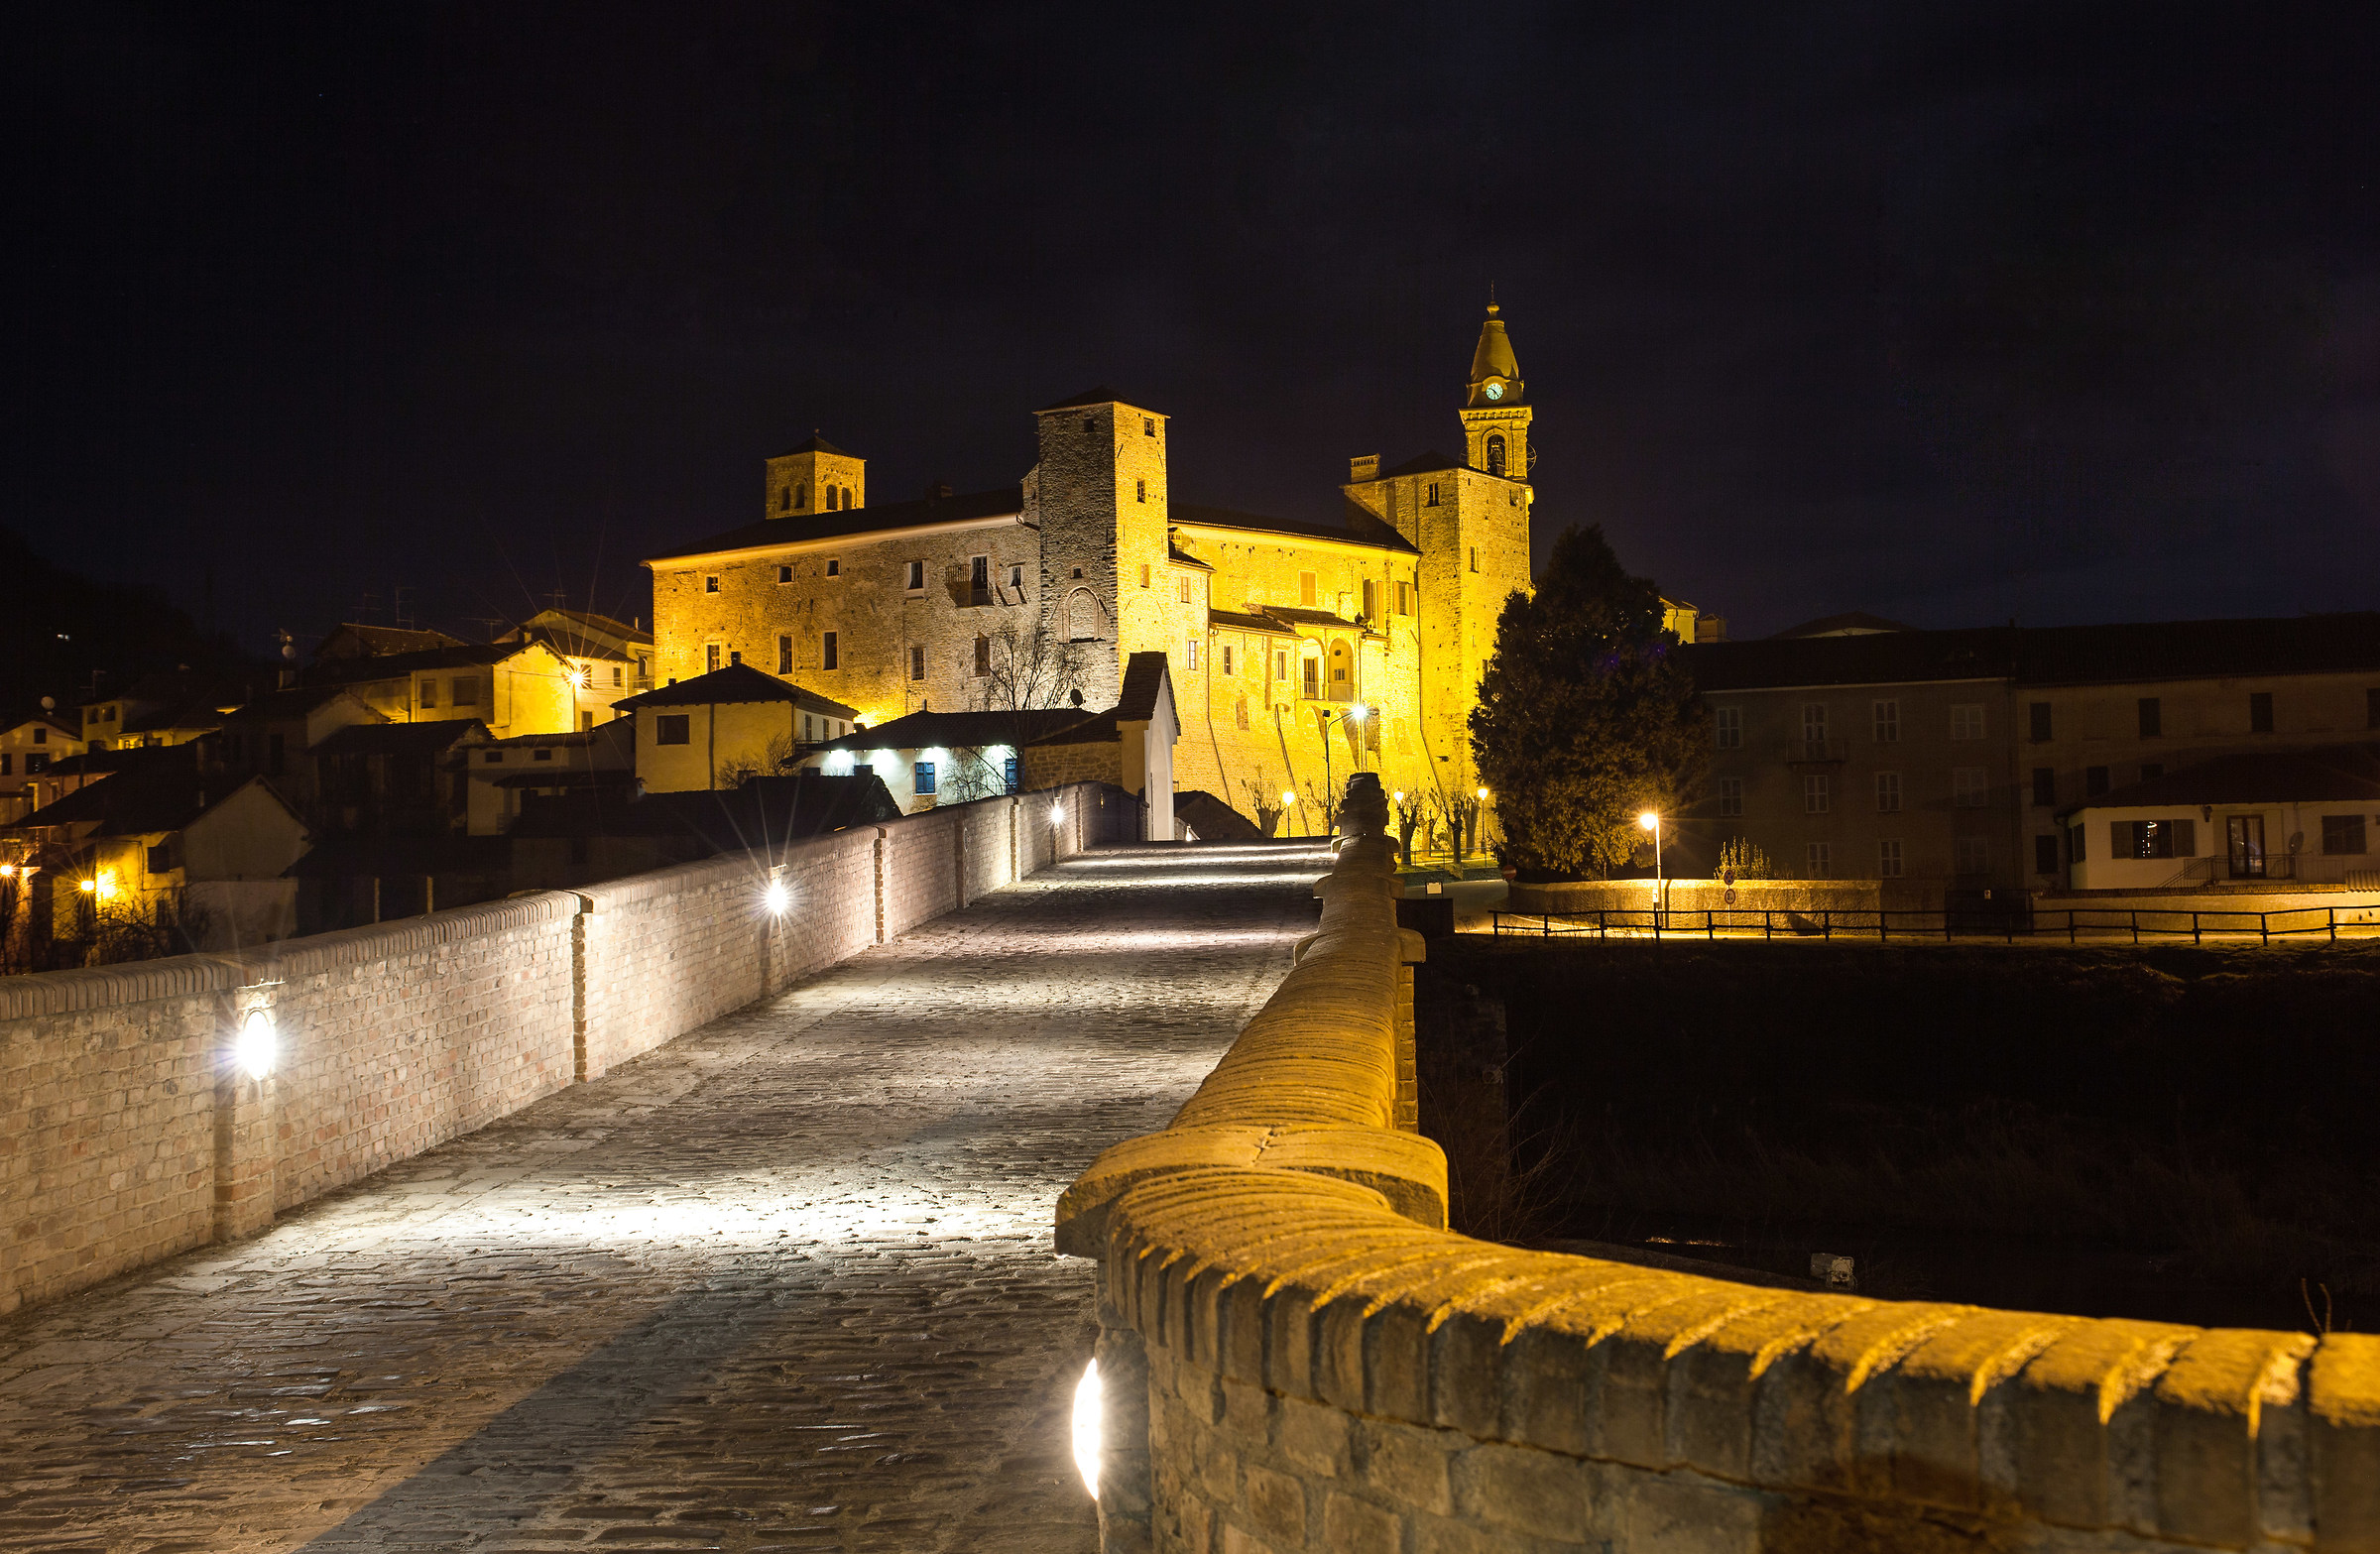 Monastero Bormida by night...